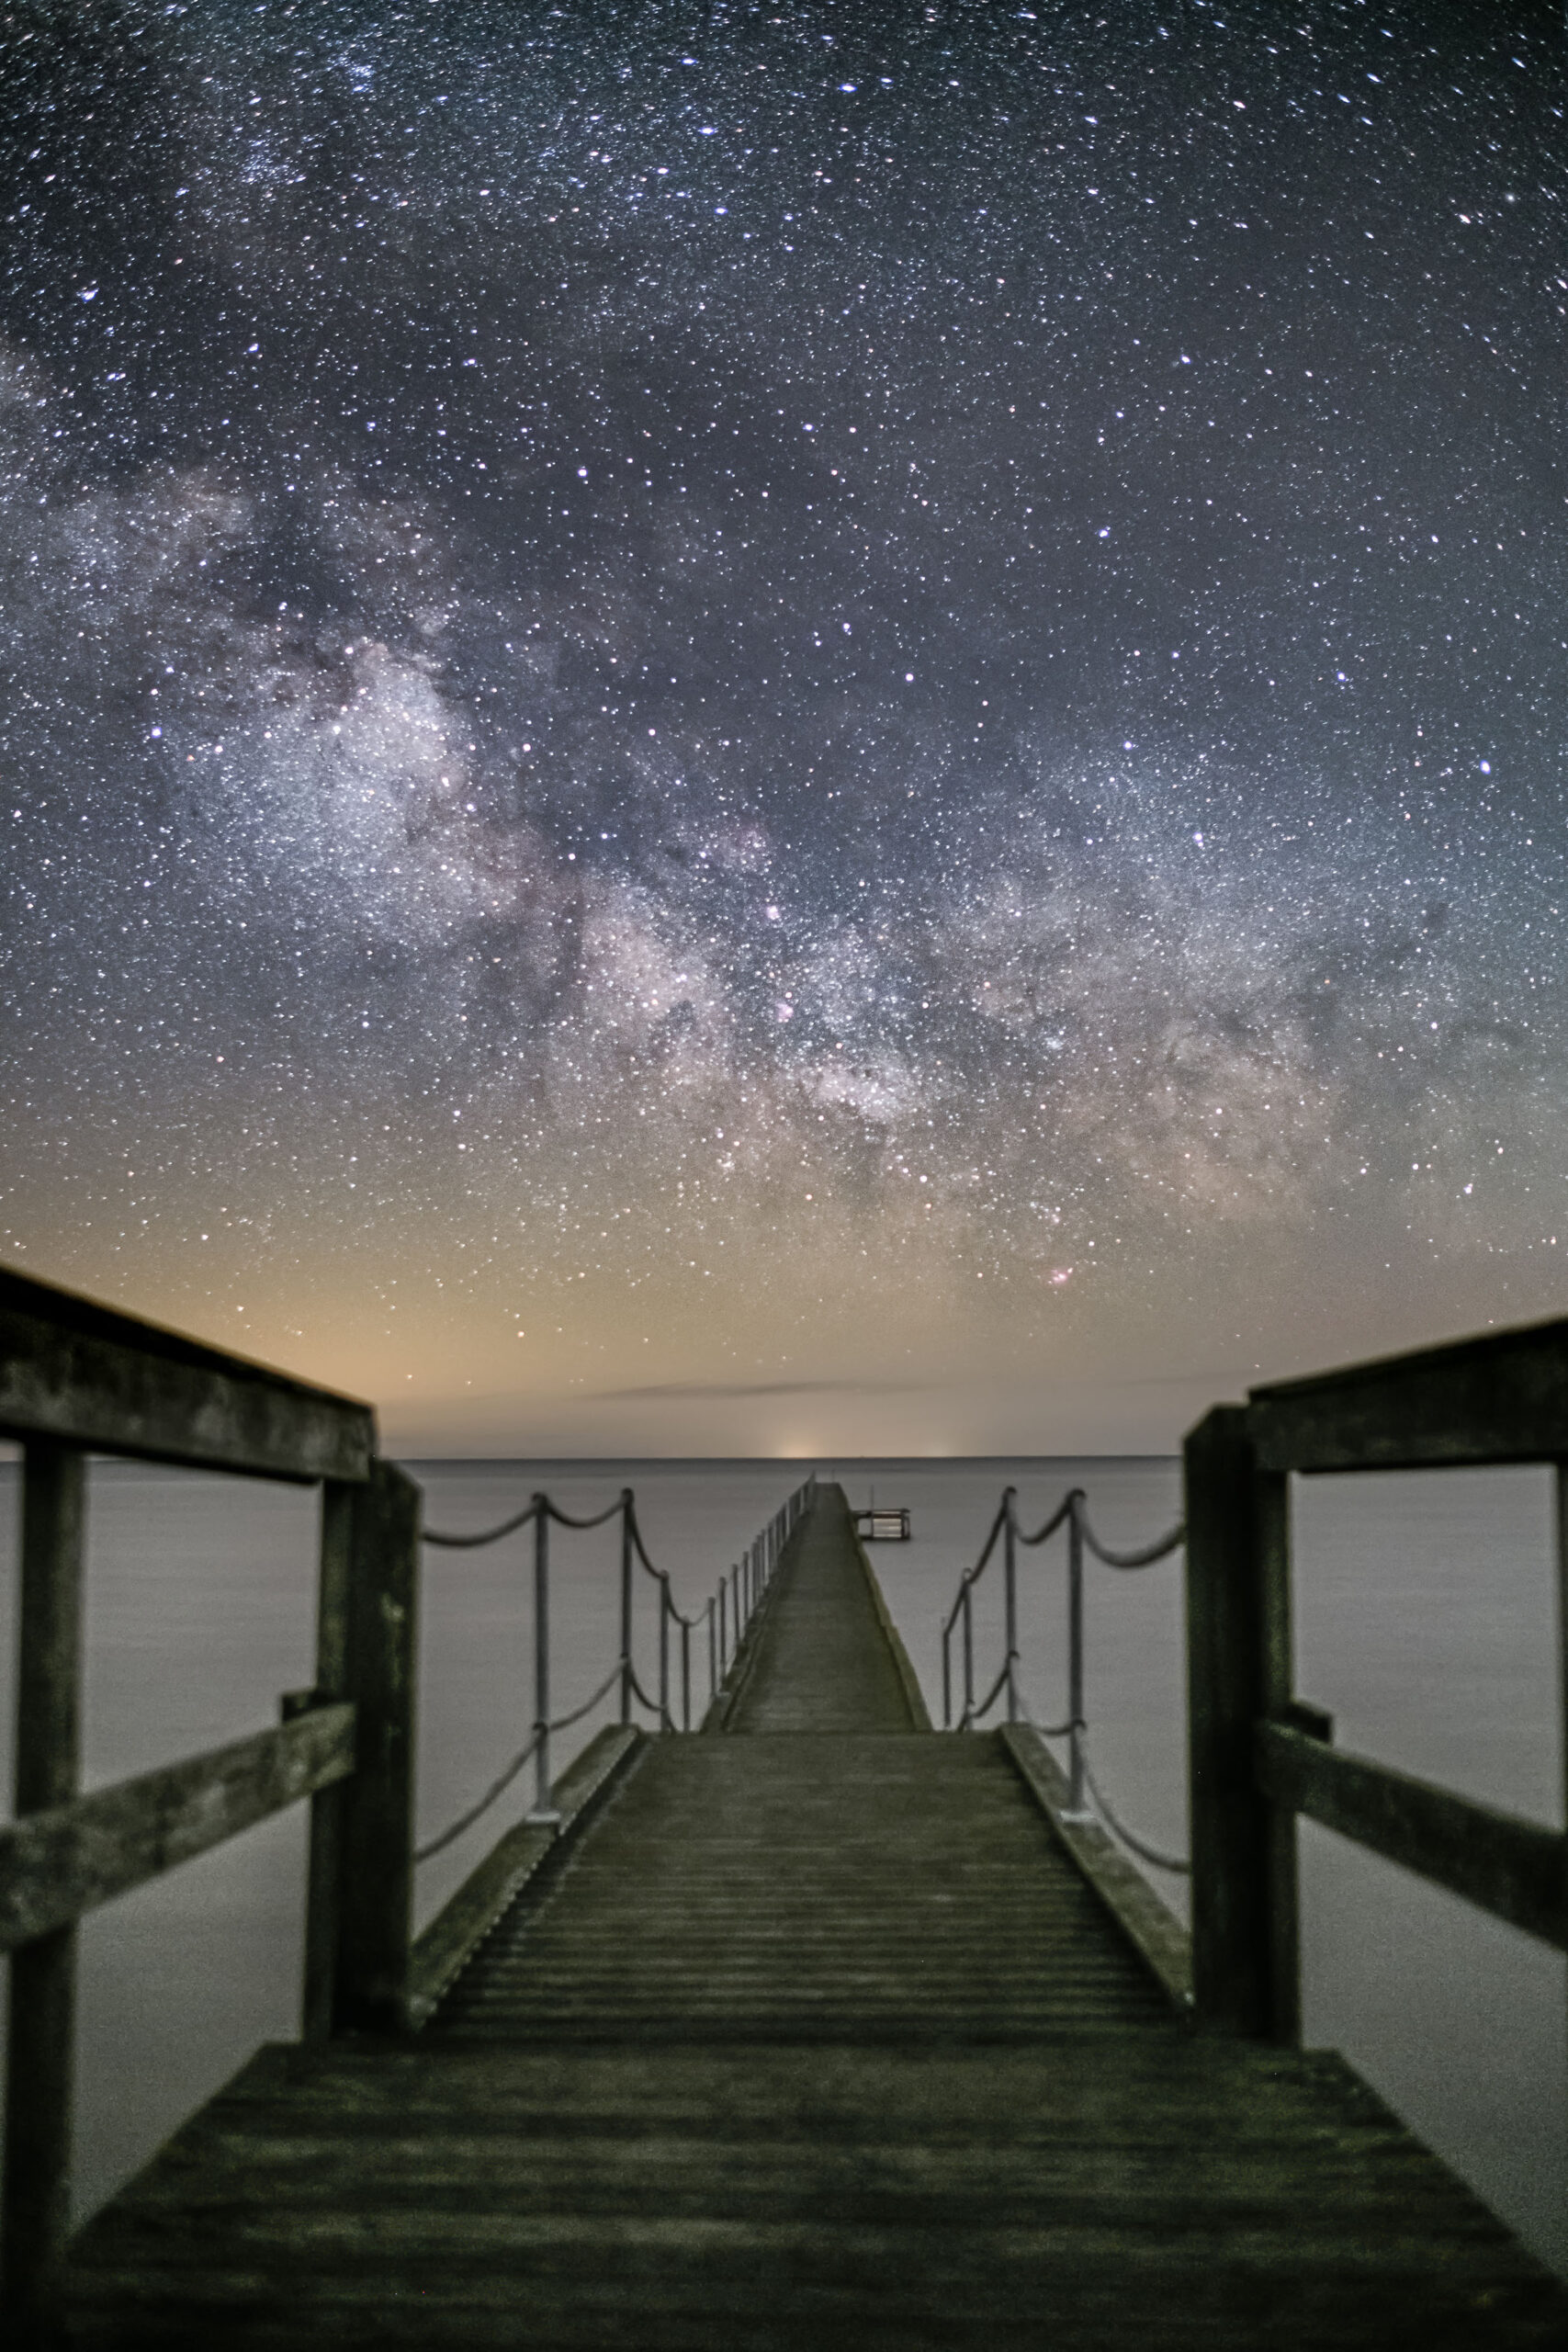 Milky Way over boat walk